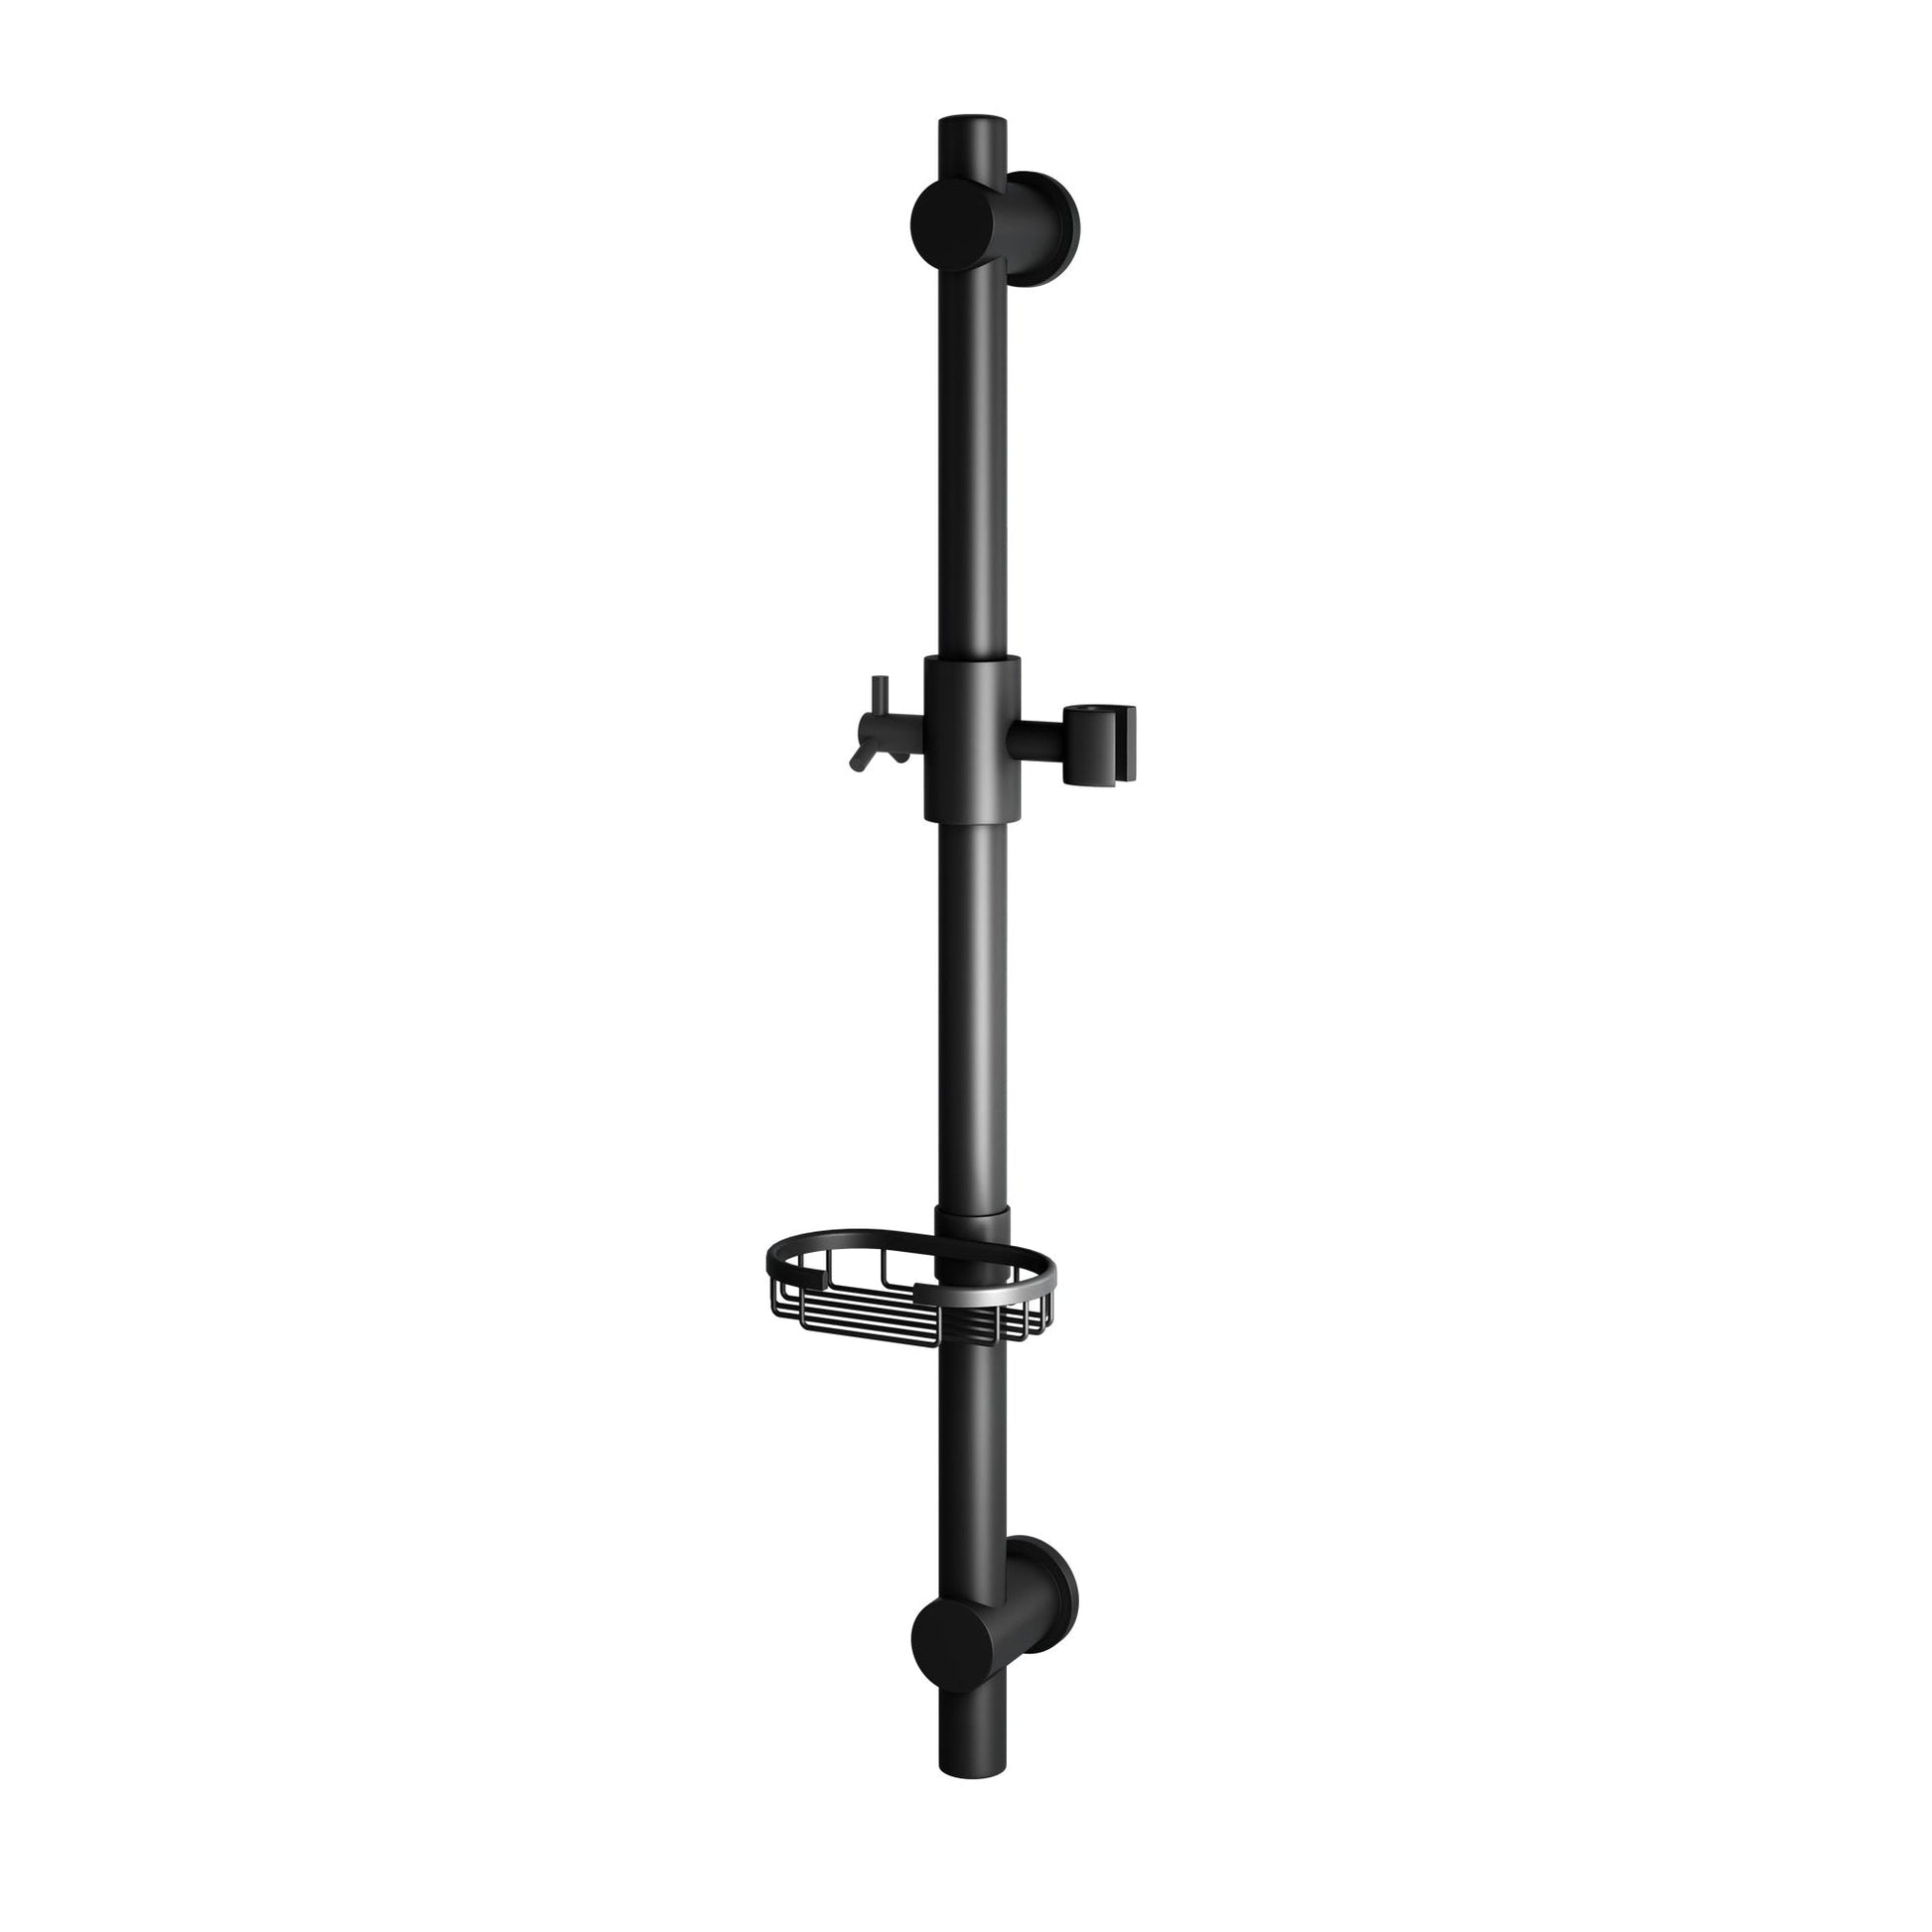 PULSE ShowerSpas Adjustable Slide Bar With Built-in Soap Dish Shower System Accessory in Matte Black Finish